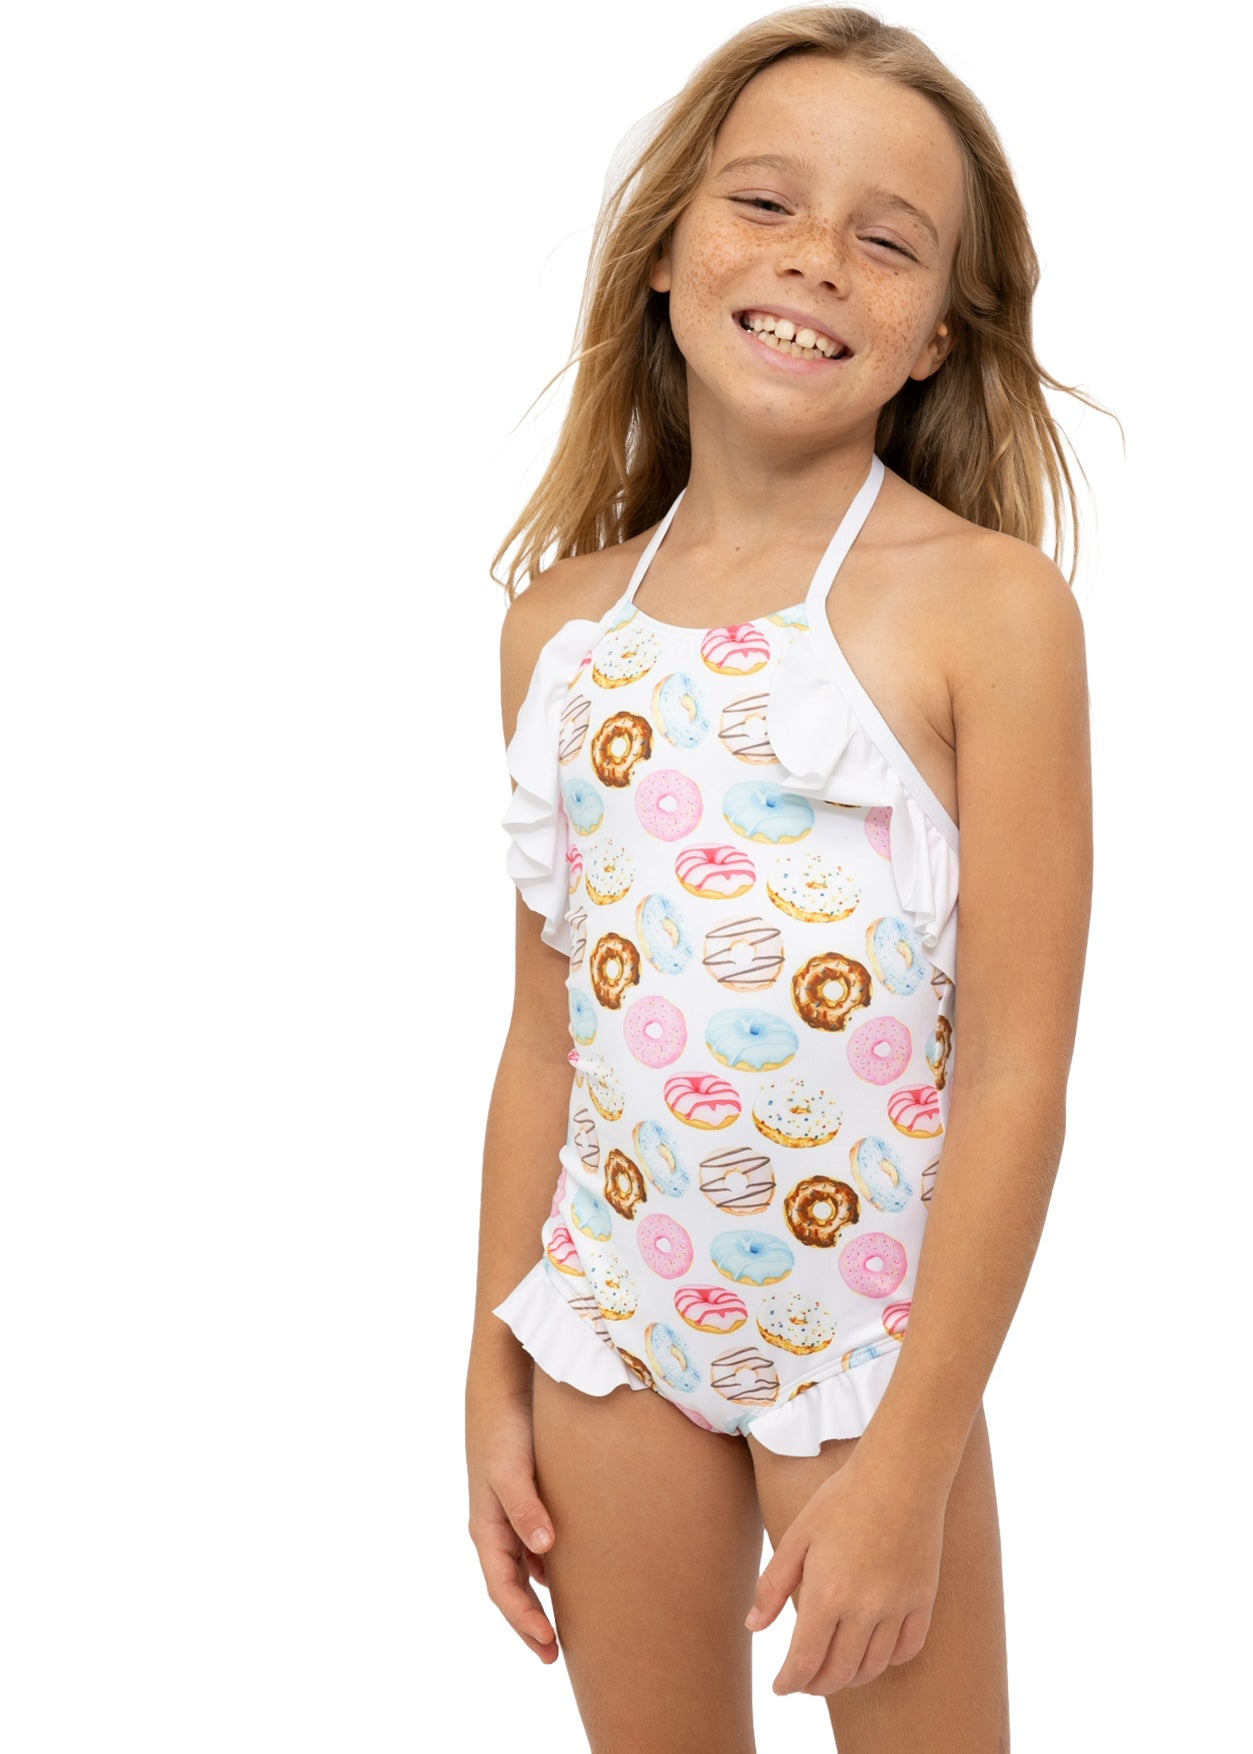 ice cream swimsuit for girls, ice cream bathing suit for girls